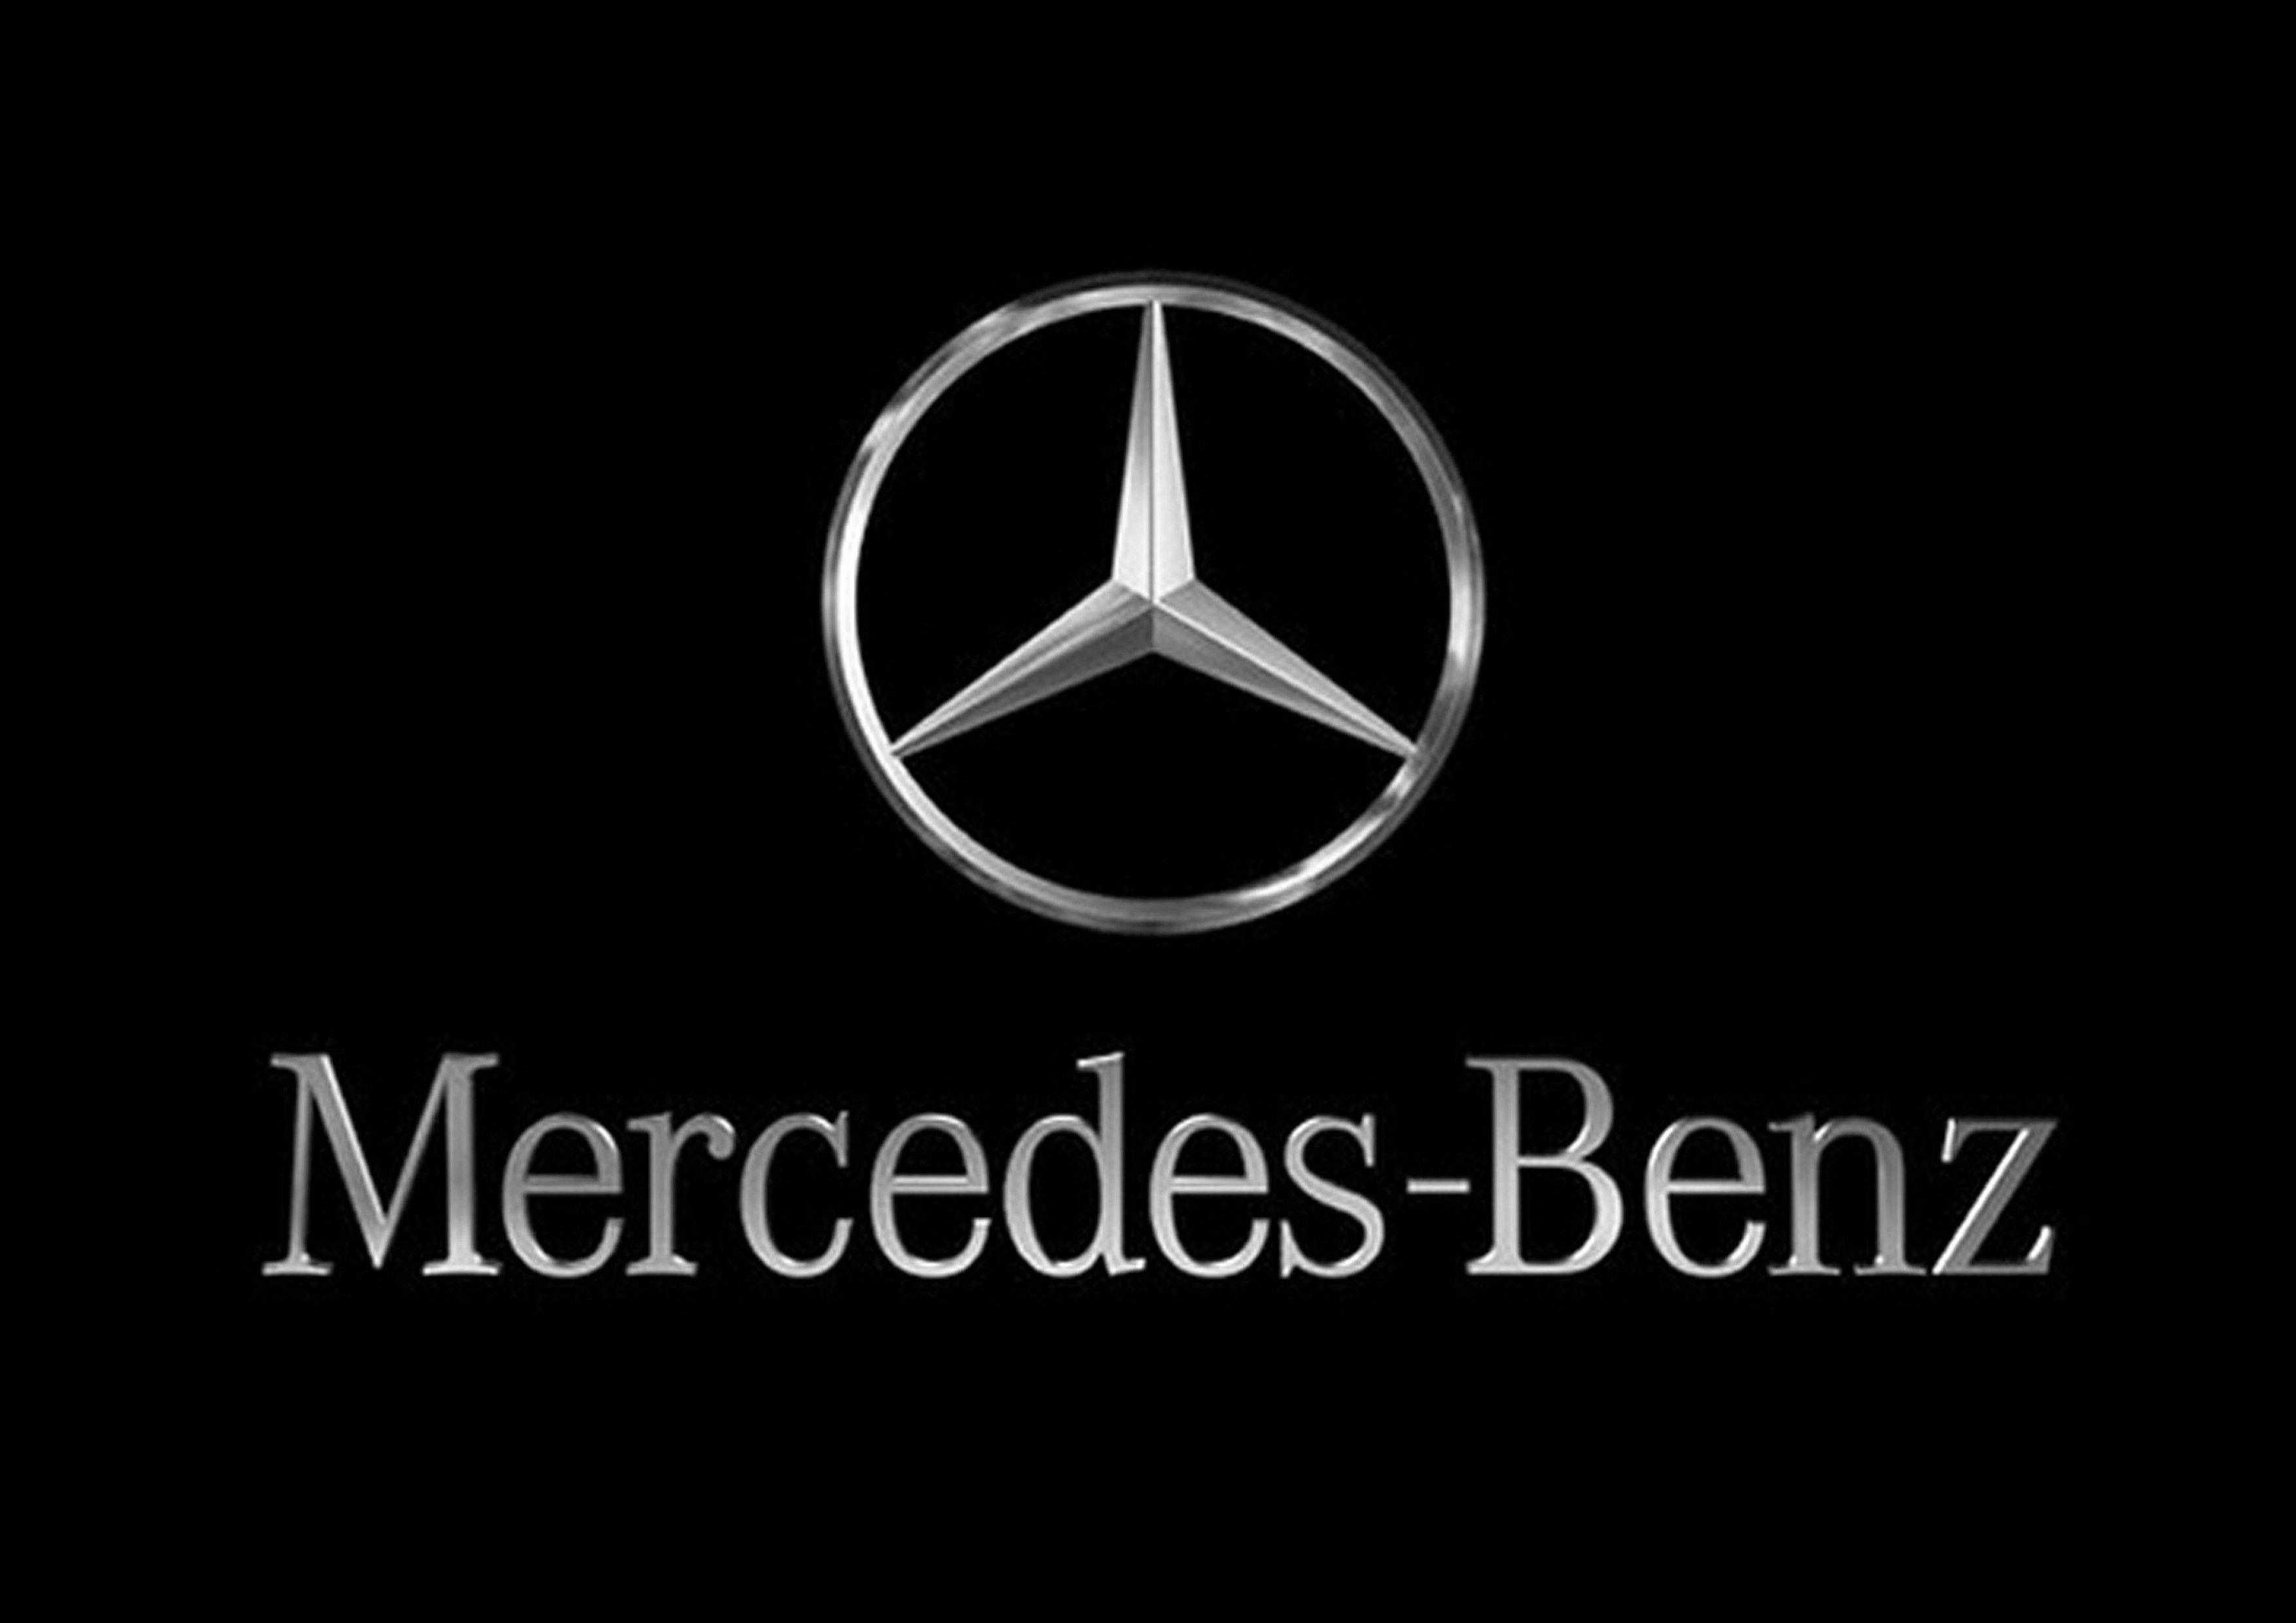 Benz Black Logo - Mercedes Benz Logo Wallpapers, Pictures, Images